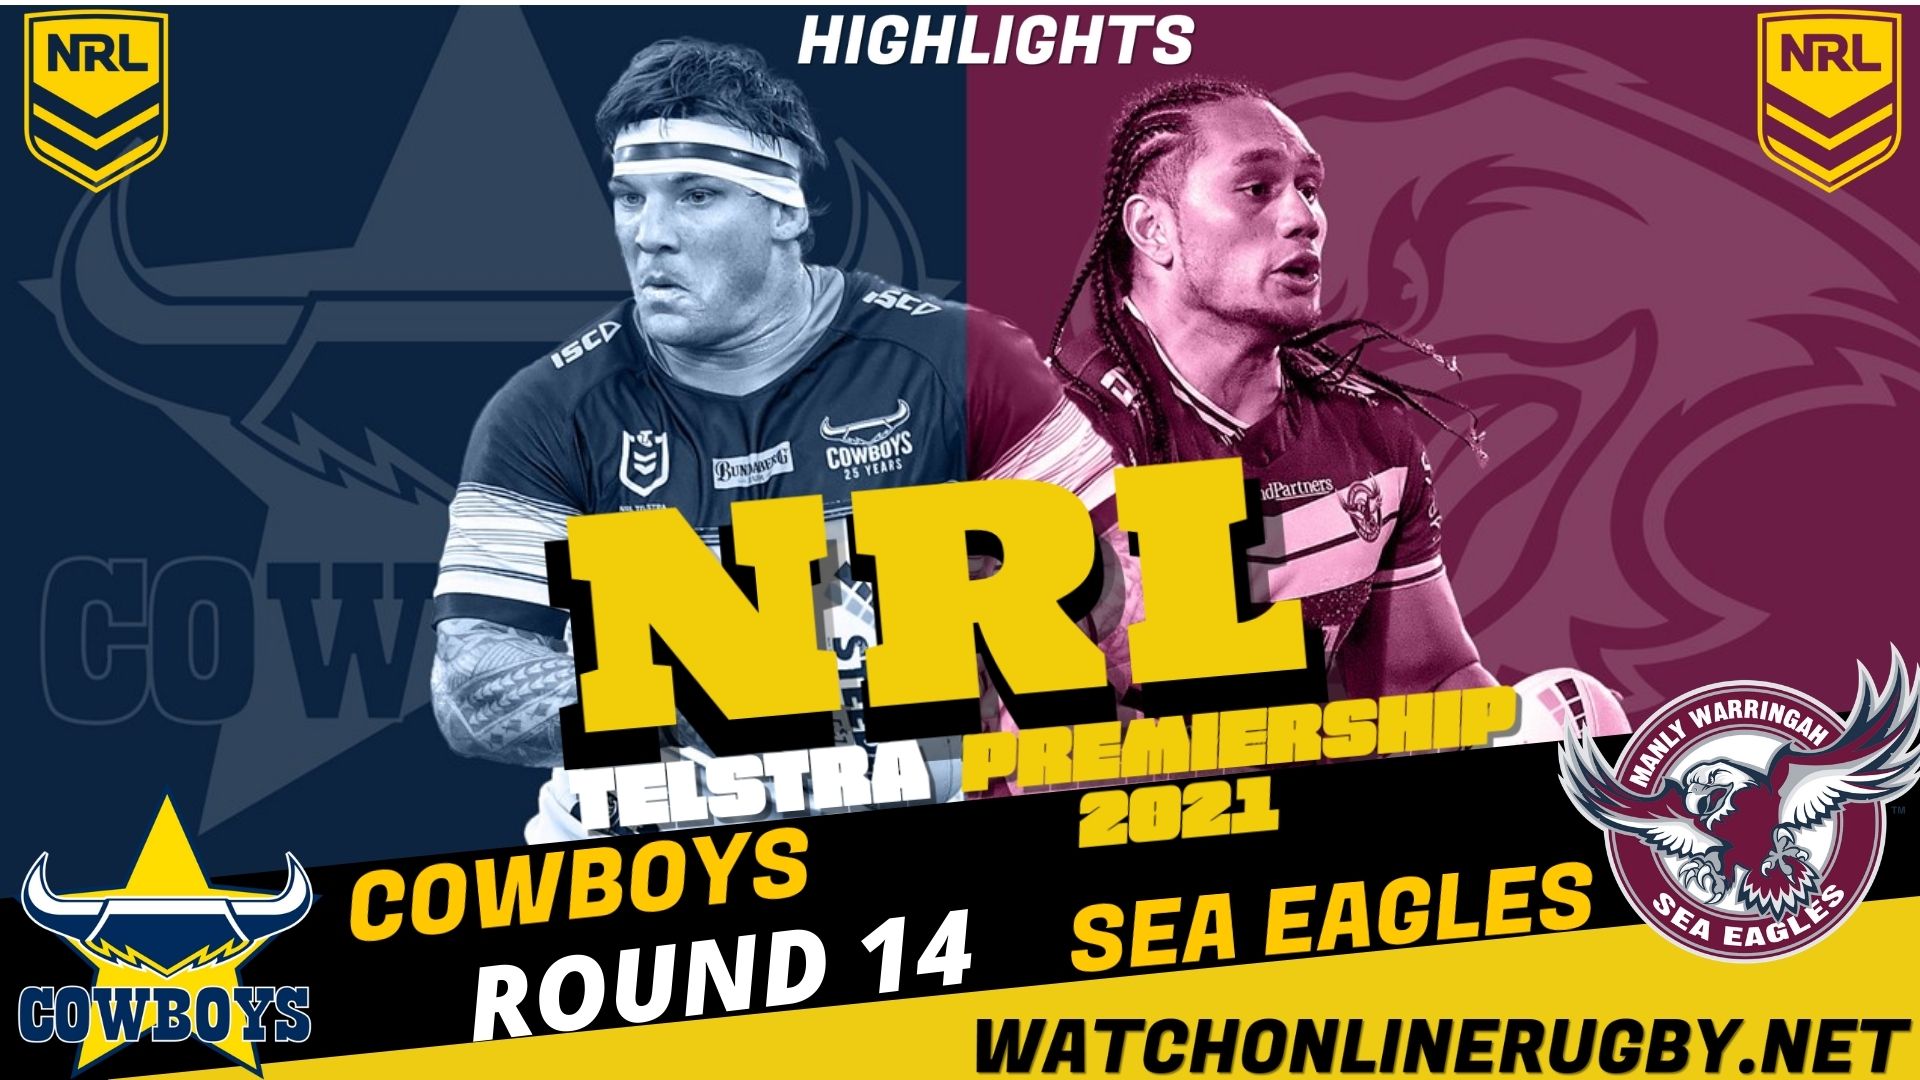 Sea Eagles Vs Cowboys Highlights RD 14 NRL Rugby